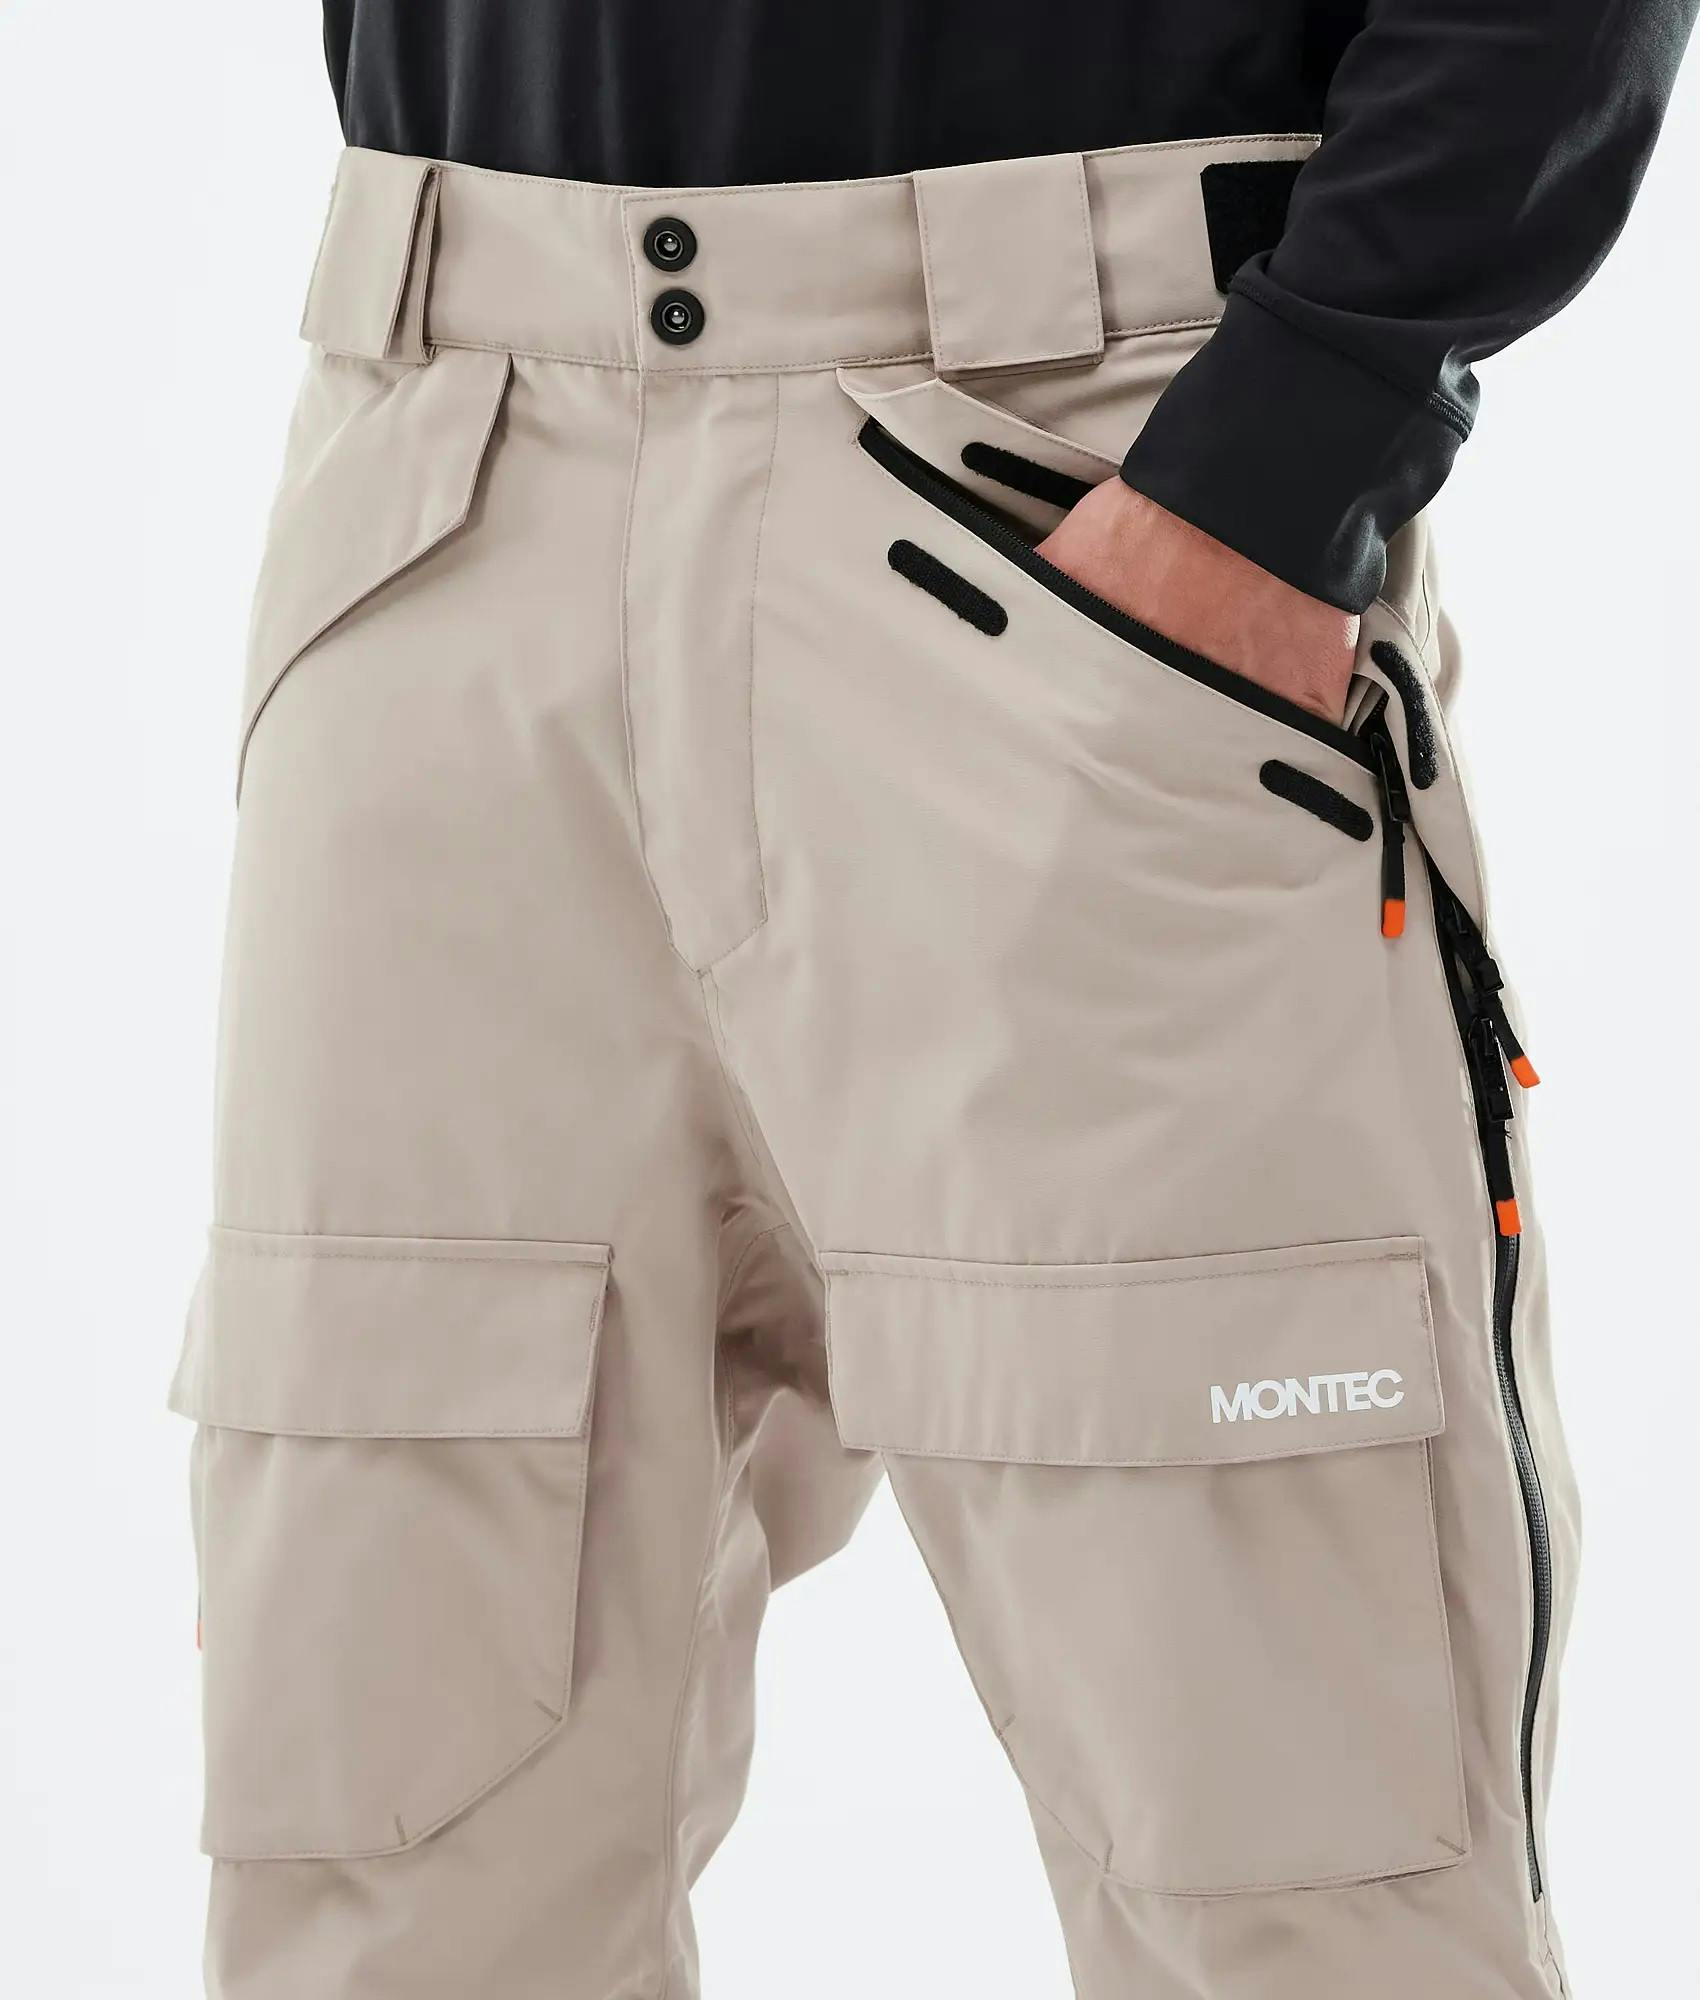 Montec Kirin ski pants